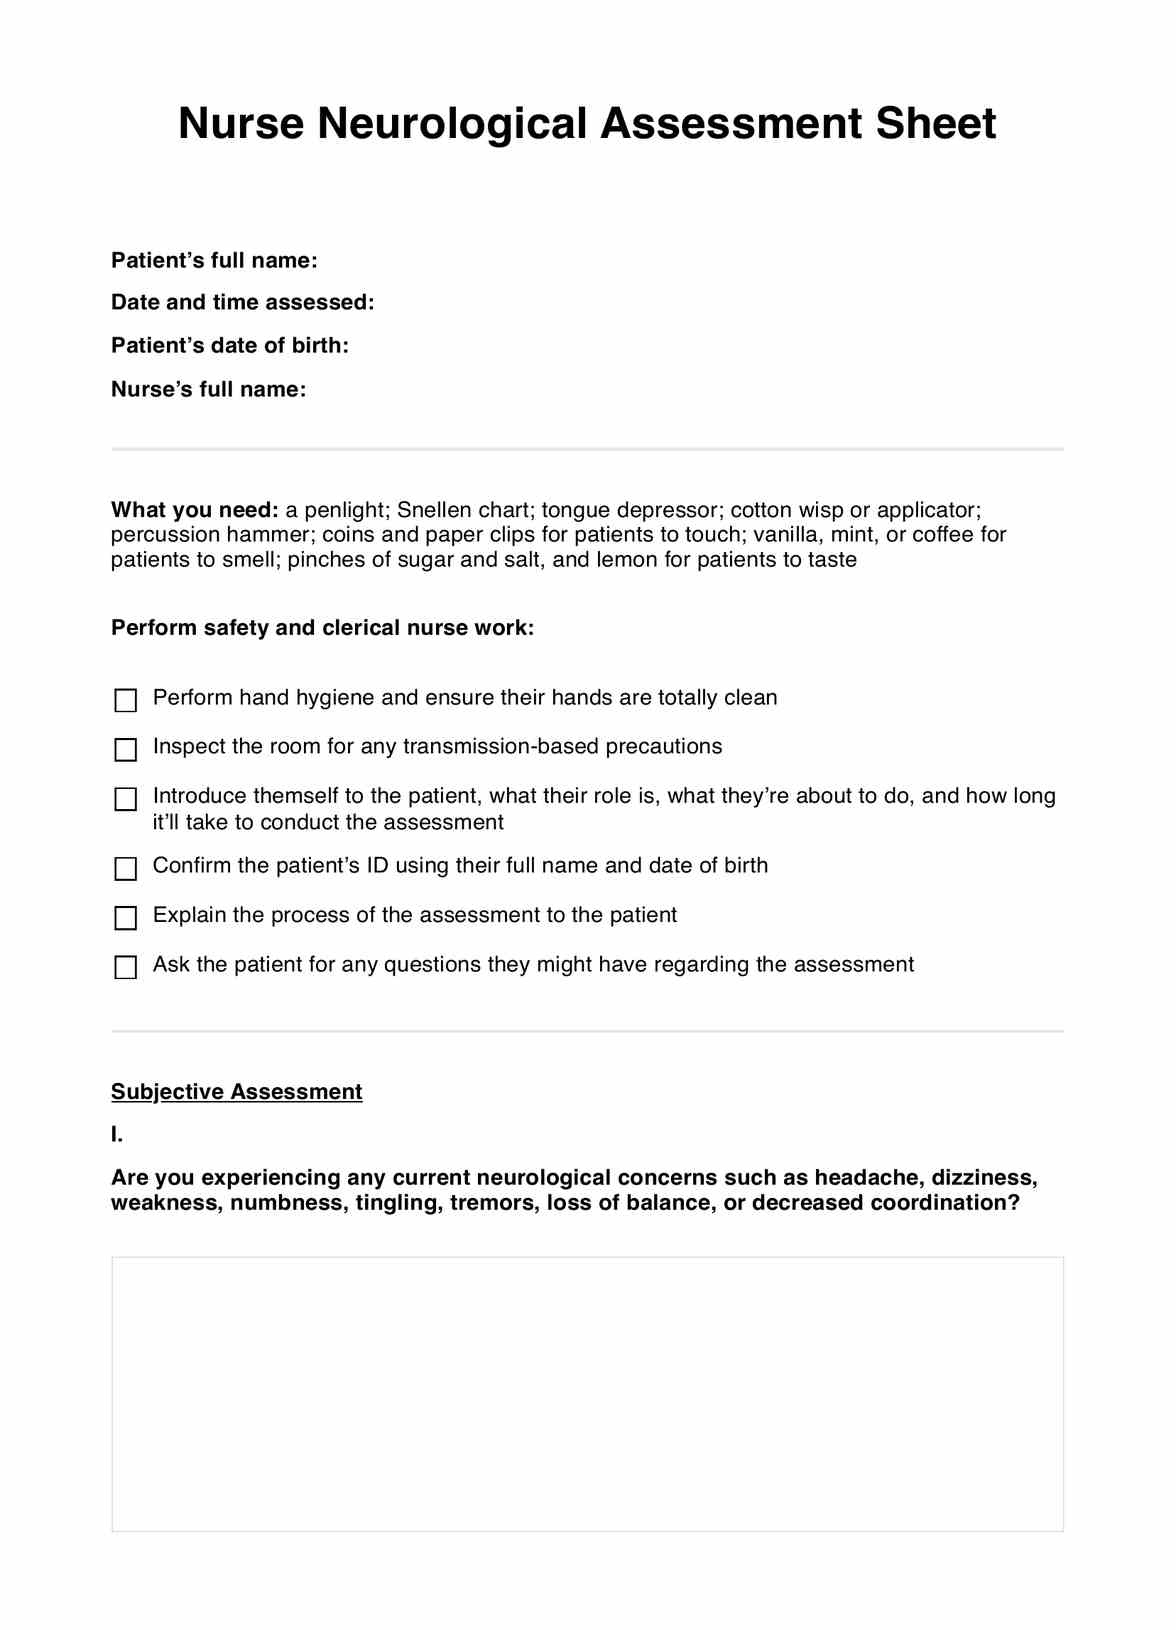 Nurse Neurological Assessment PDF Example